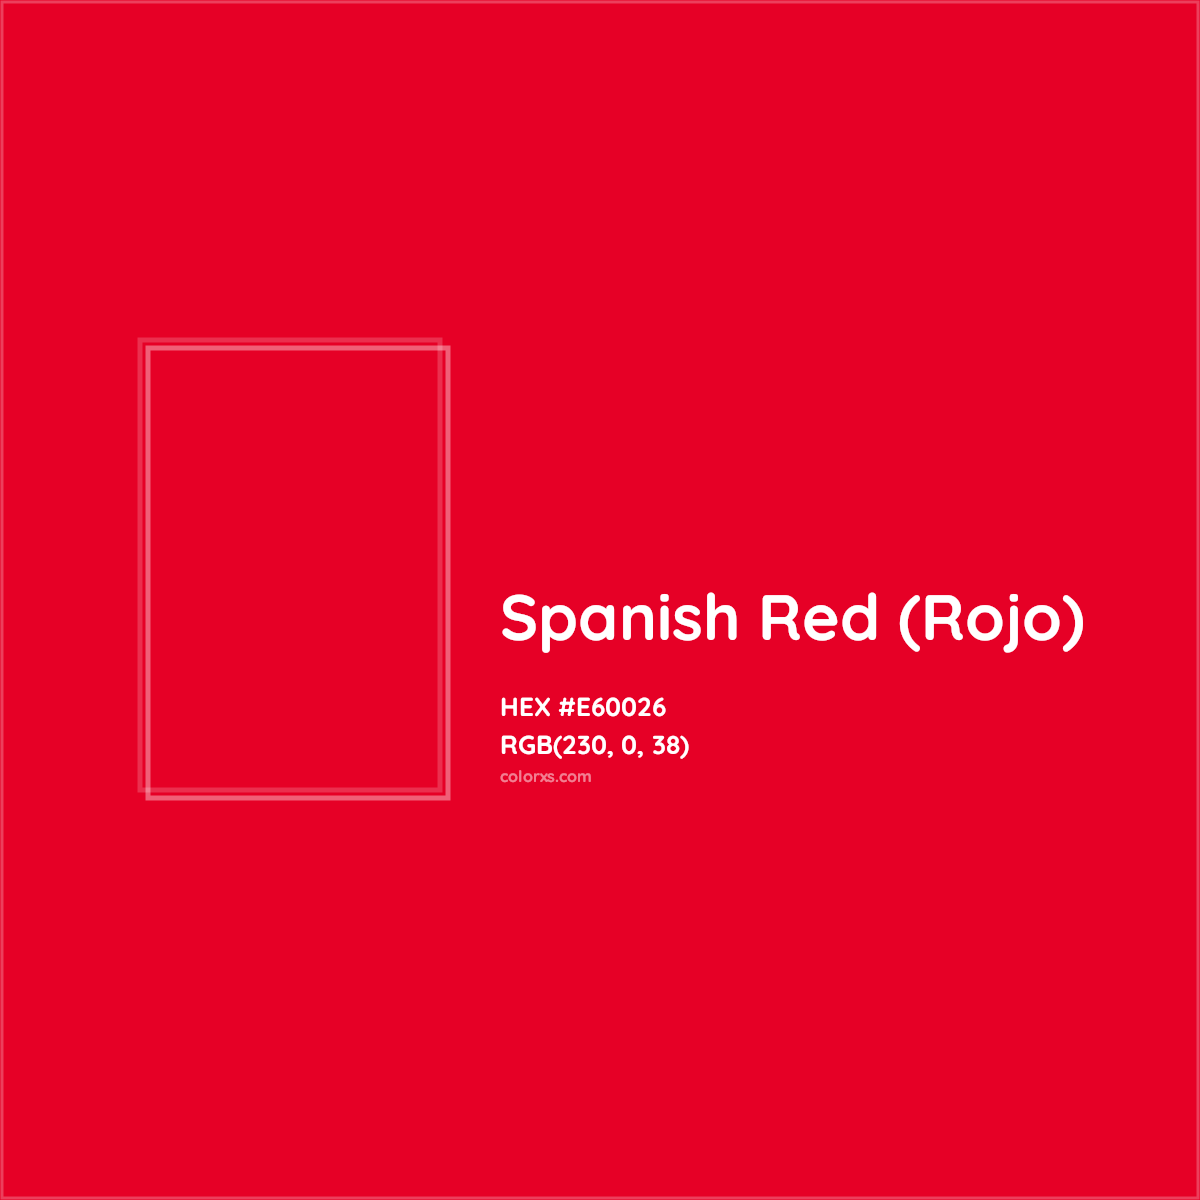 HEX #E60026 Spanish Red (Rojo) Color - Color Code